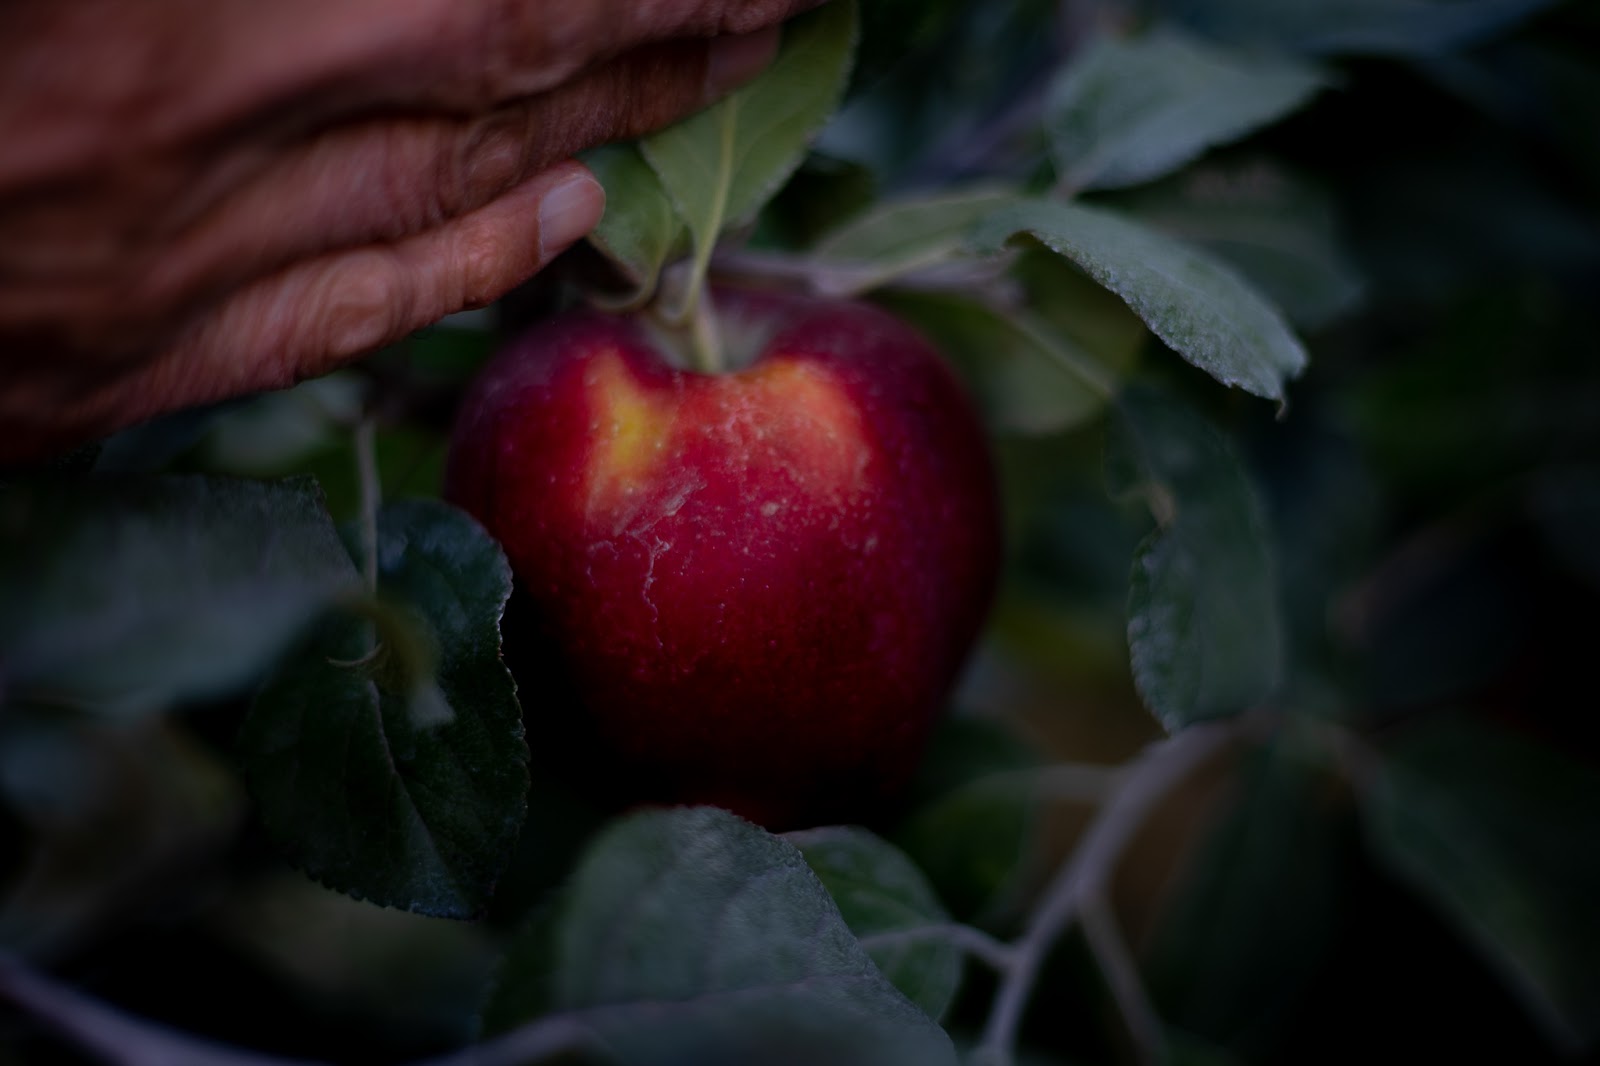 Cosmic Crisp® apples – Whitestone Mountain Orchard